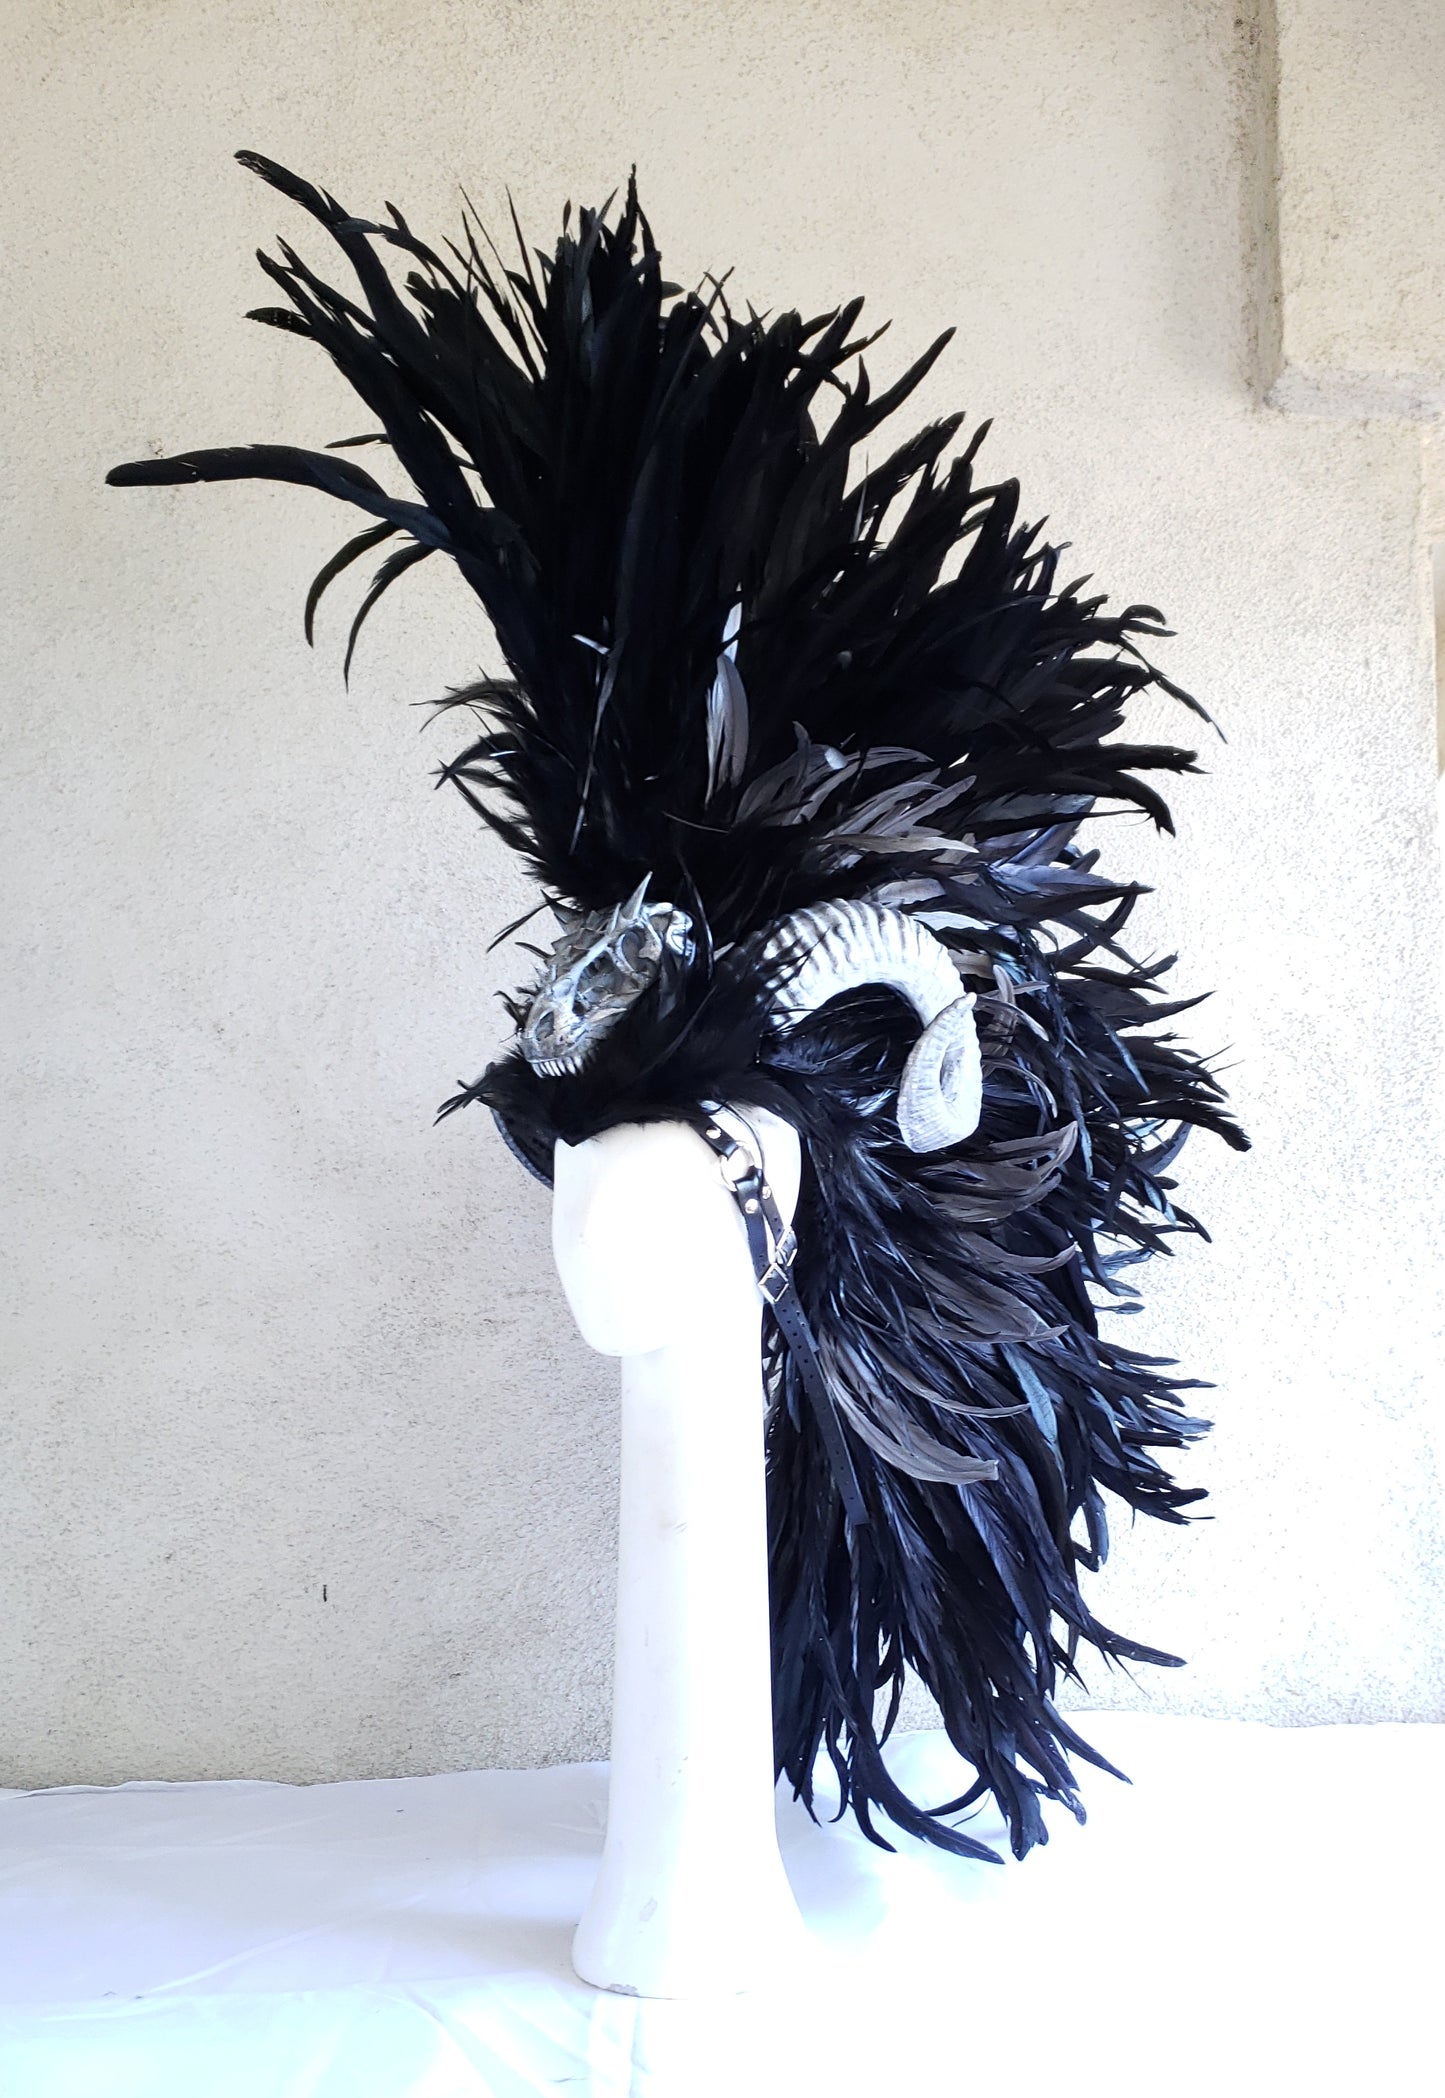 Dragon Slayer Headdress- Black feather headdress with ram horns and dragon skull